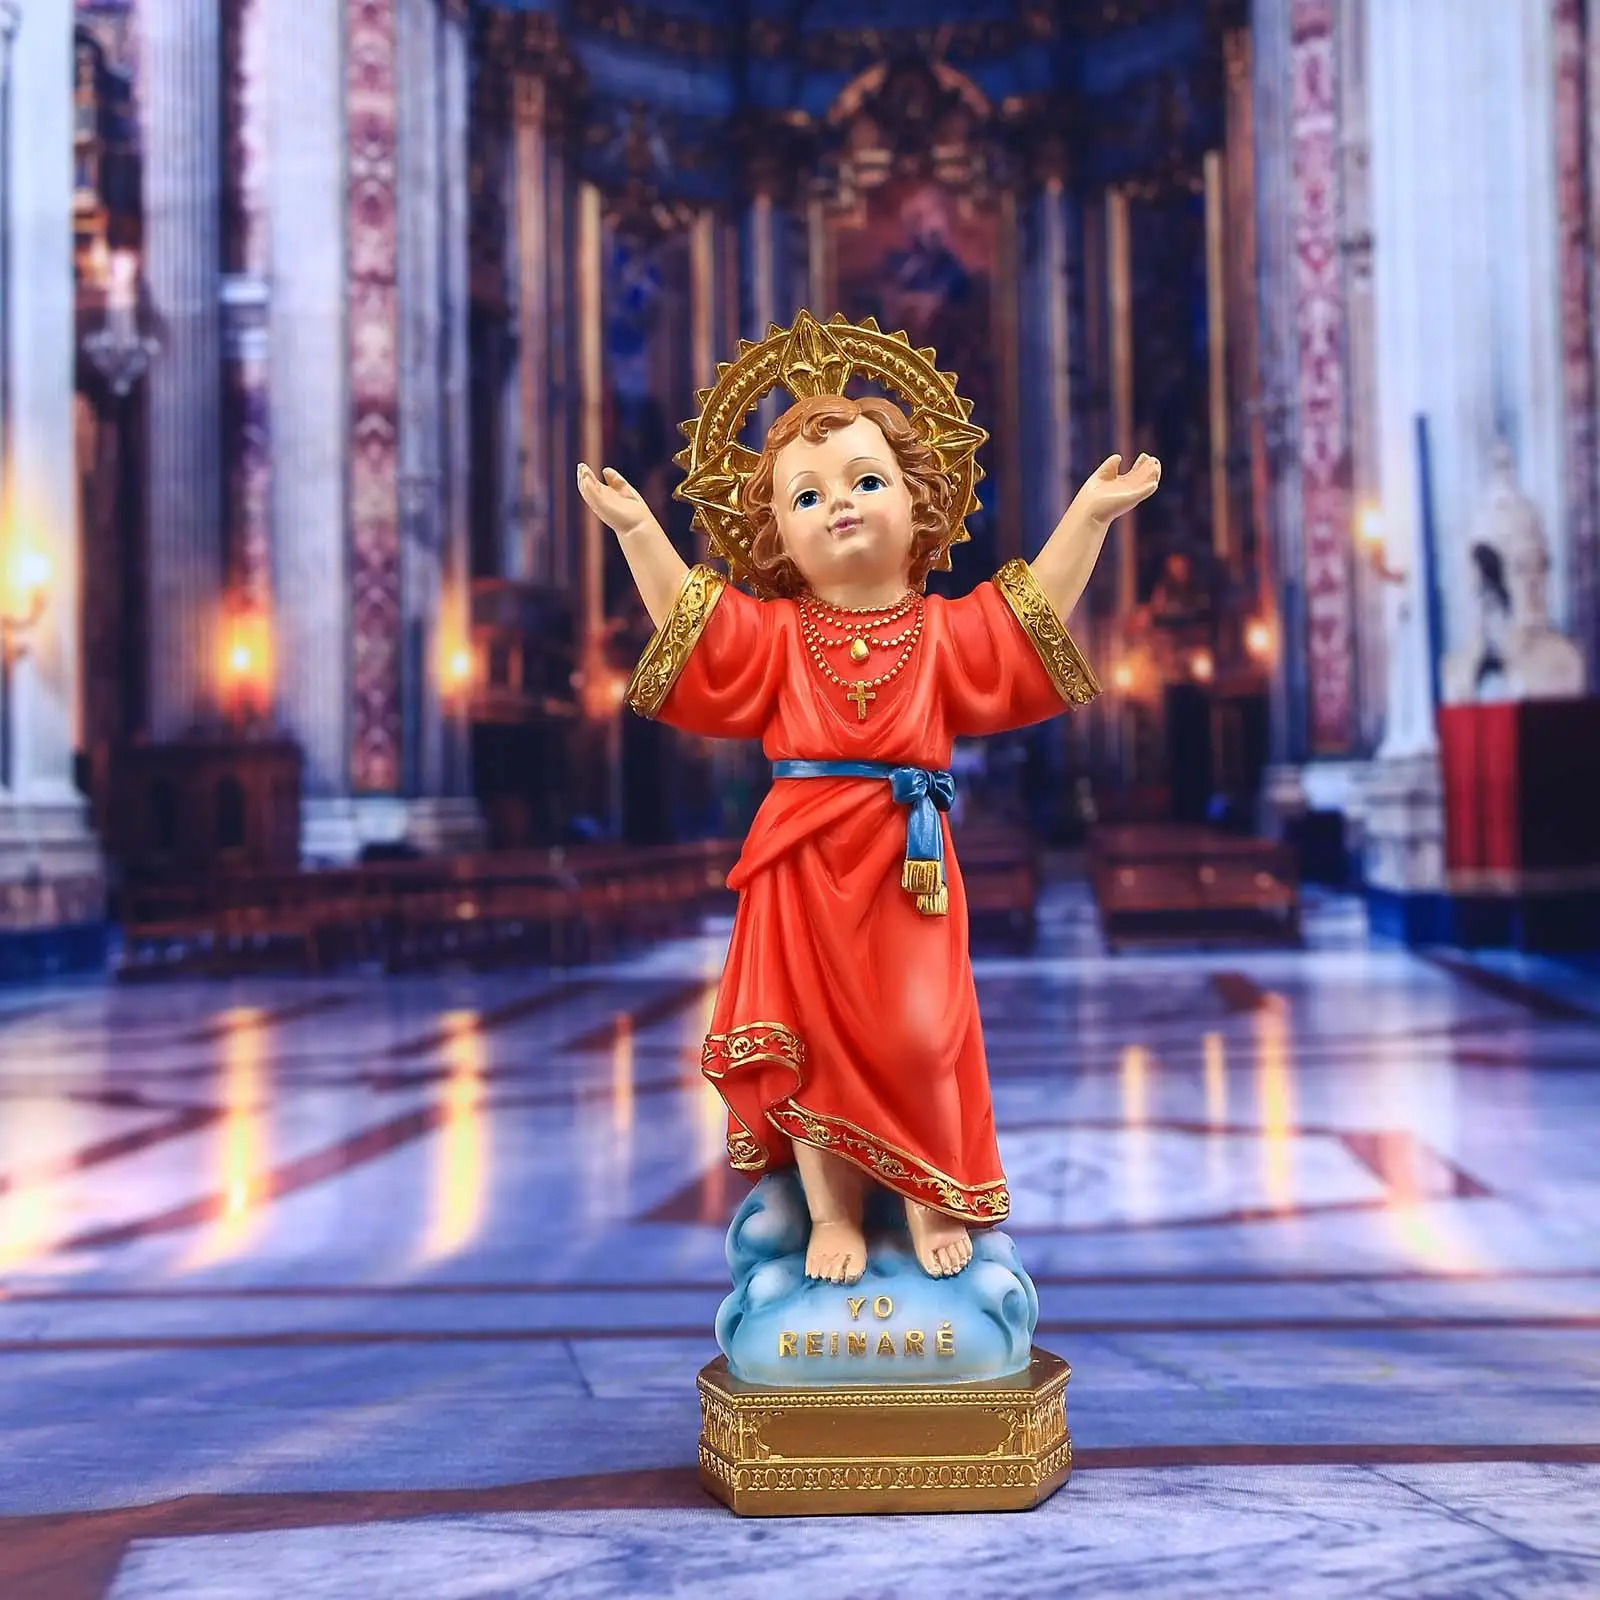 Resin Statue, Sculpture Religious Decor Church Ornament for Desktop Church Home Housewarming Gifts